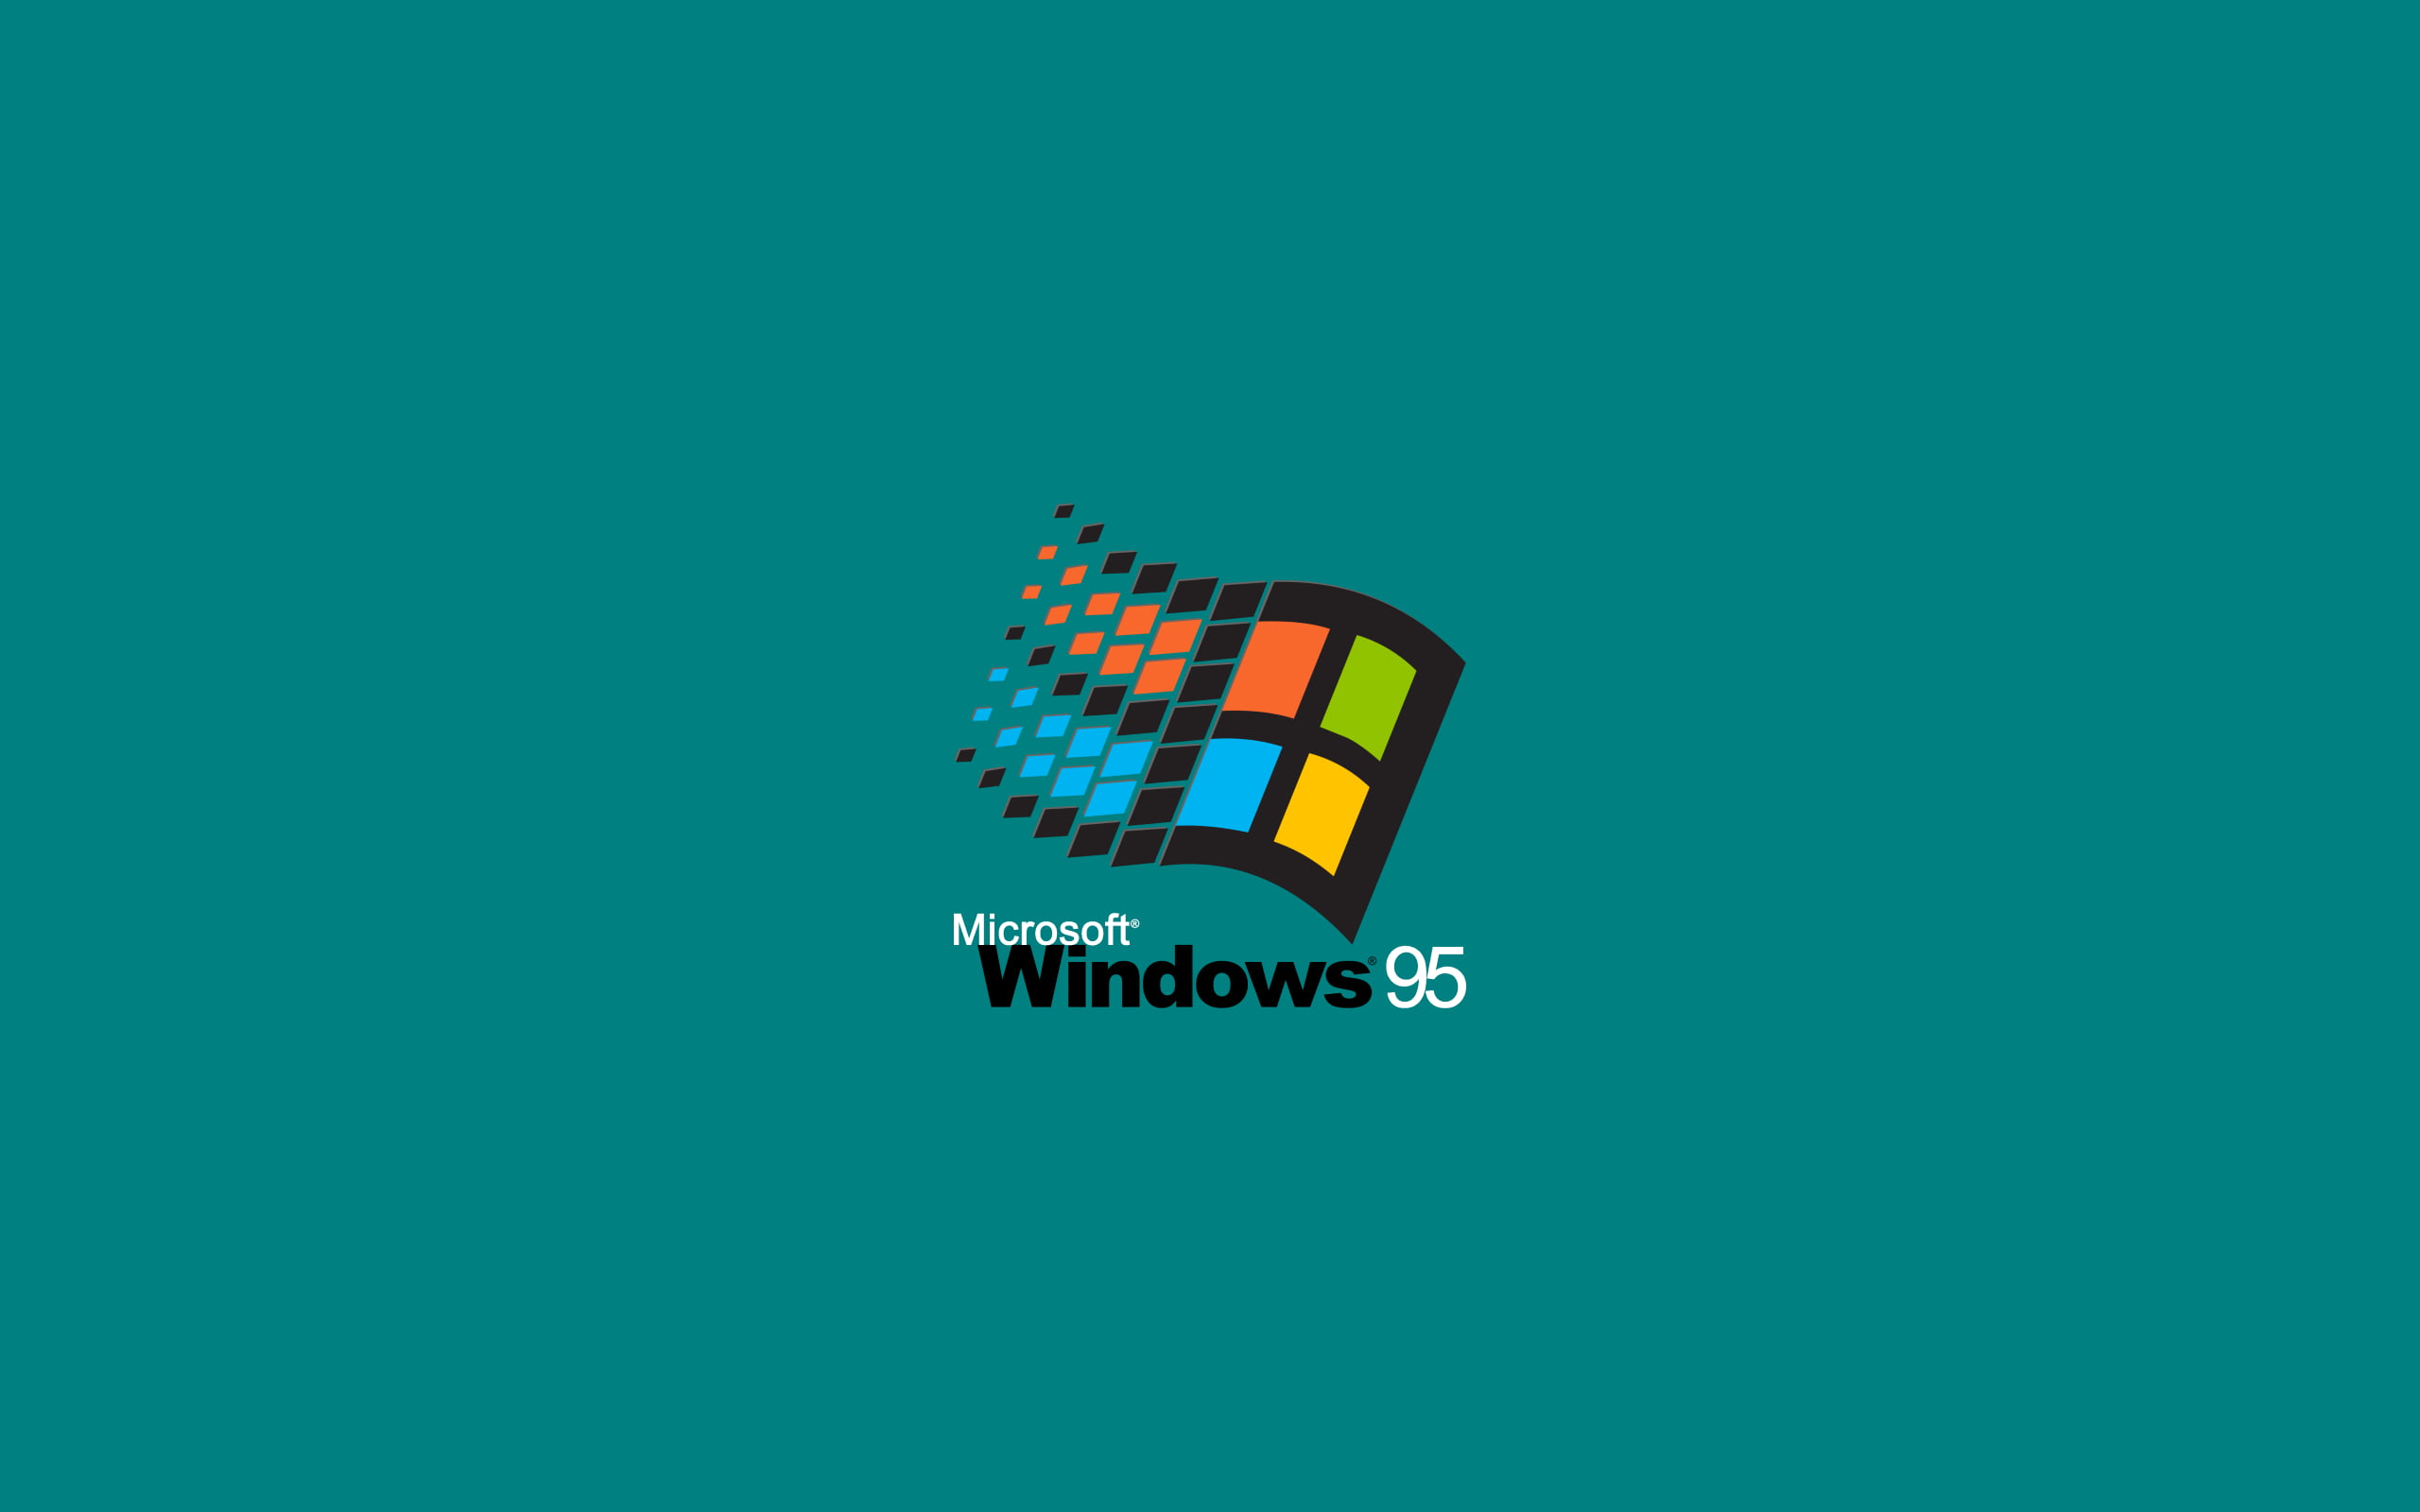 Microsoft Windows 95 logo, Windows 95, operating systems, vintage ...